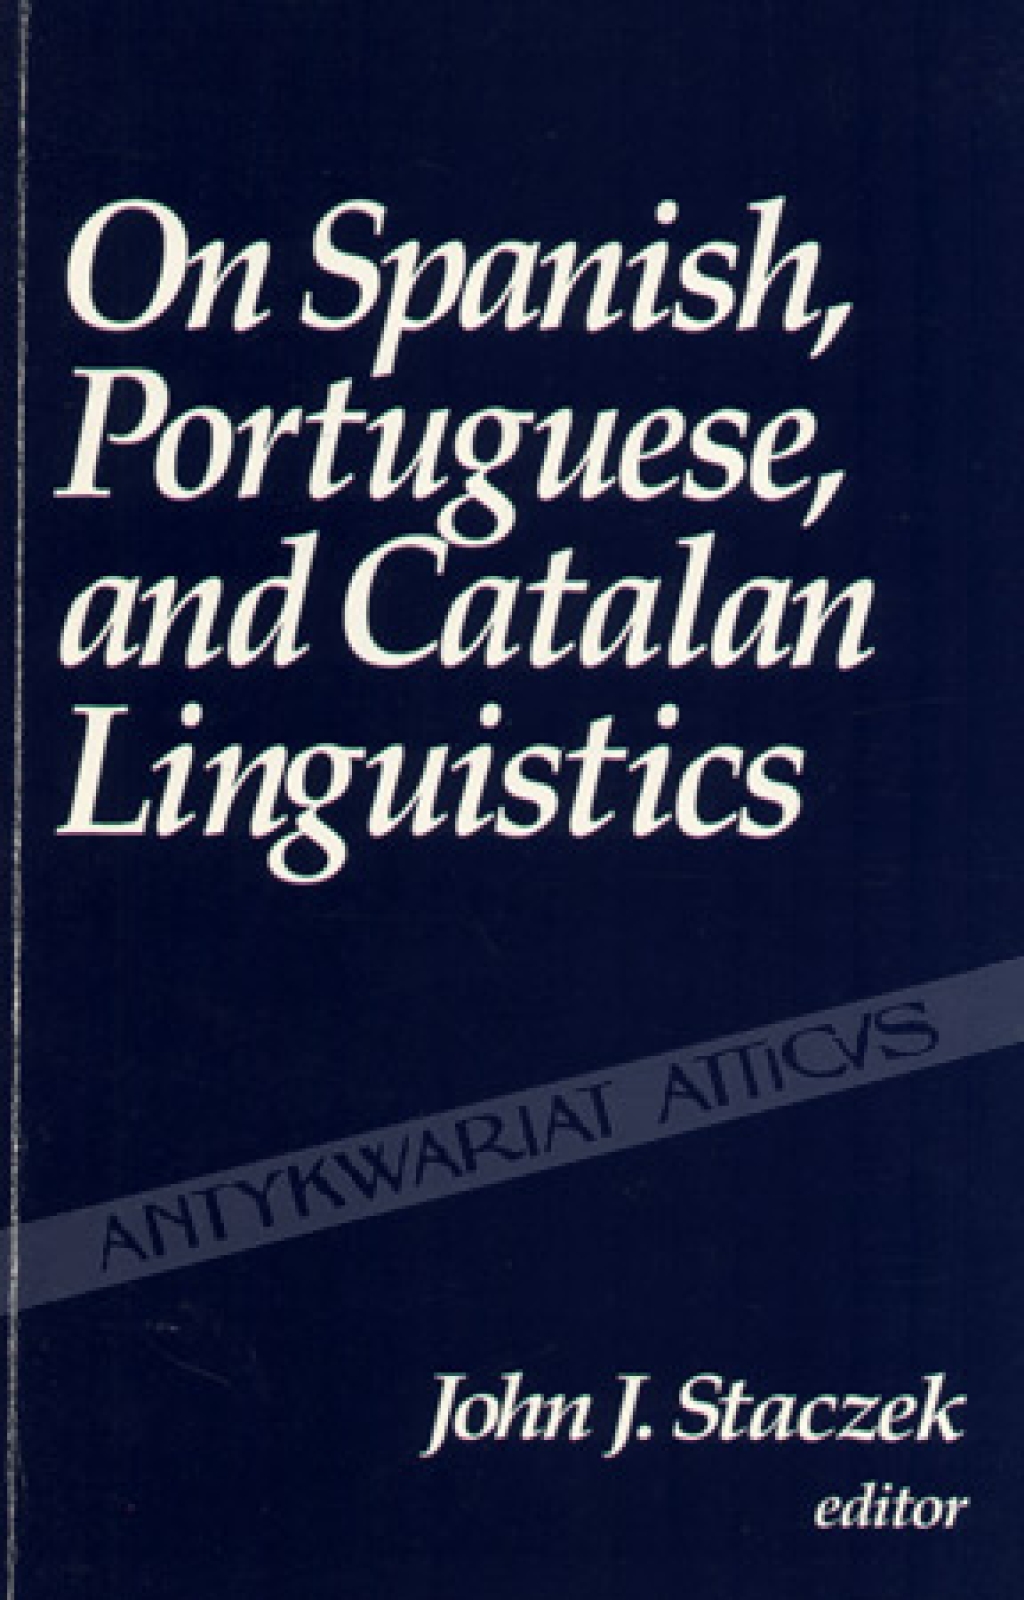 On Spanish, Portuguese, and Catalan Linguistics